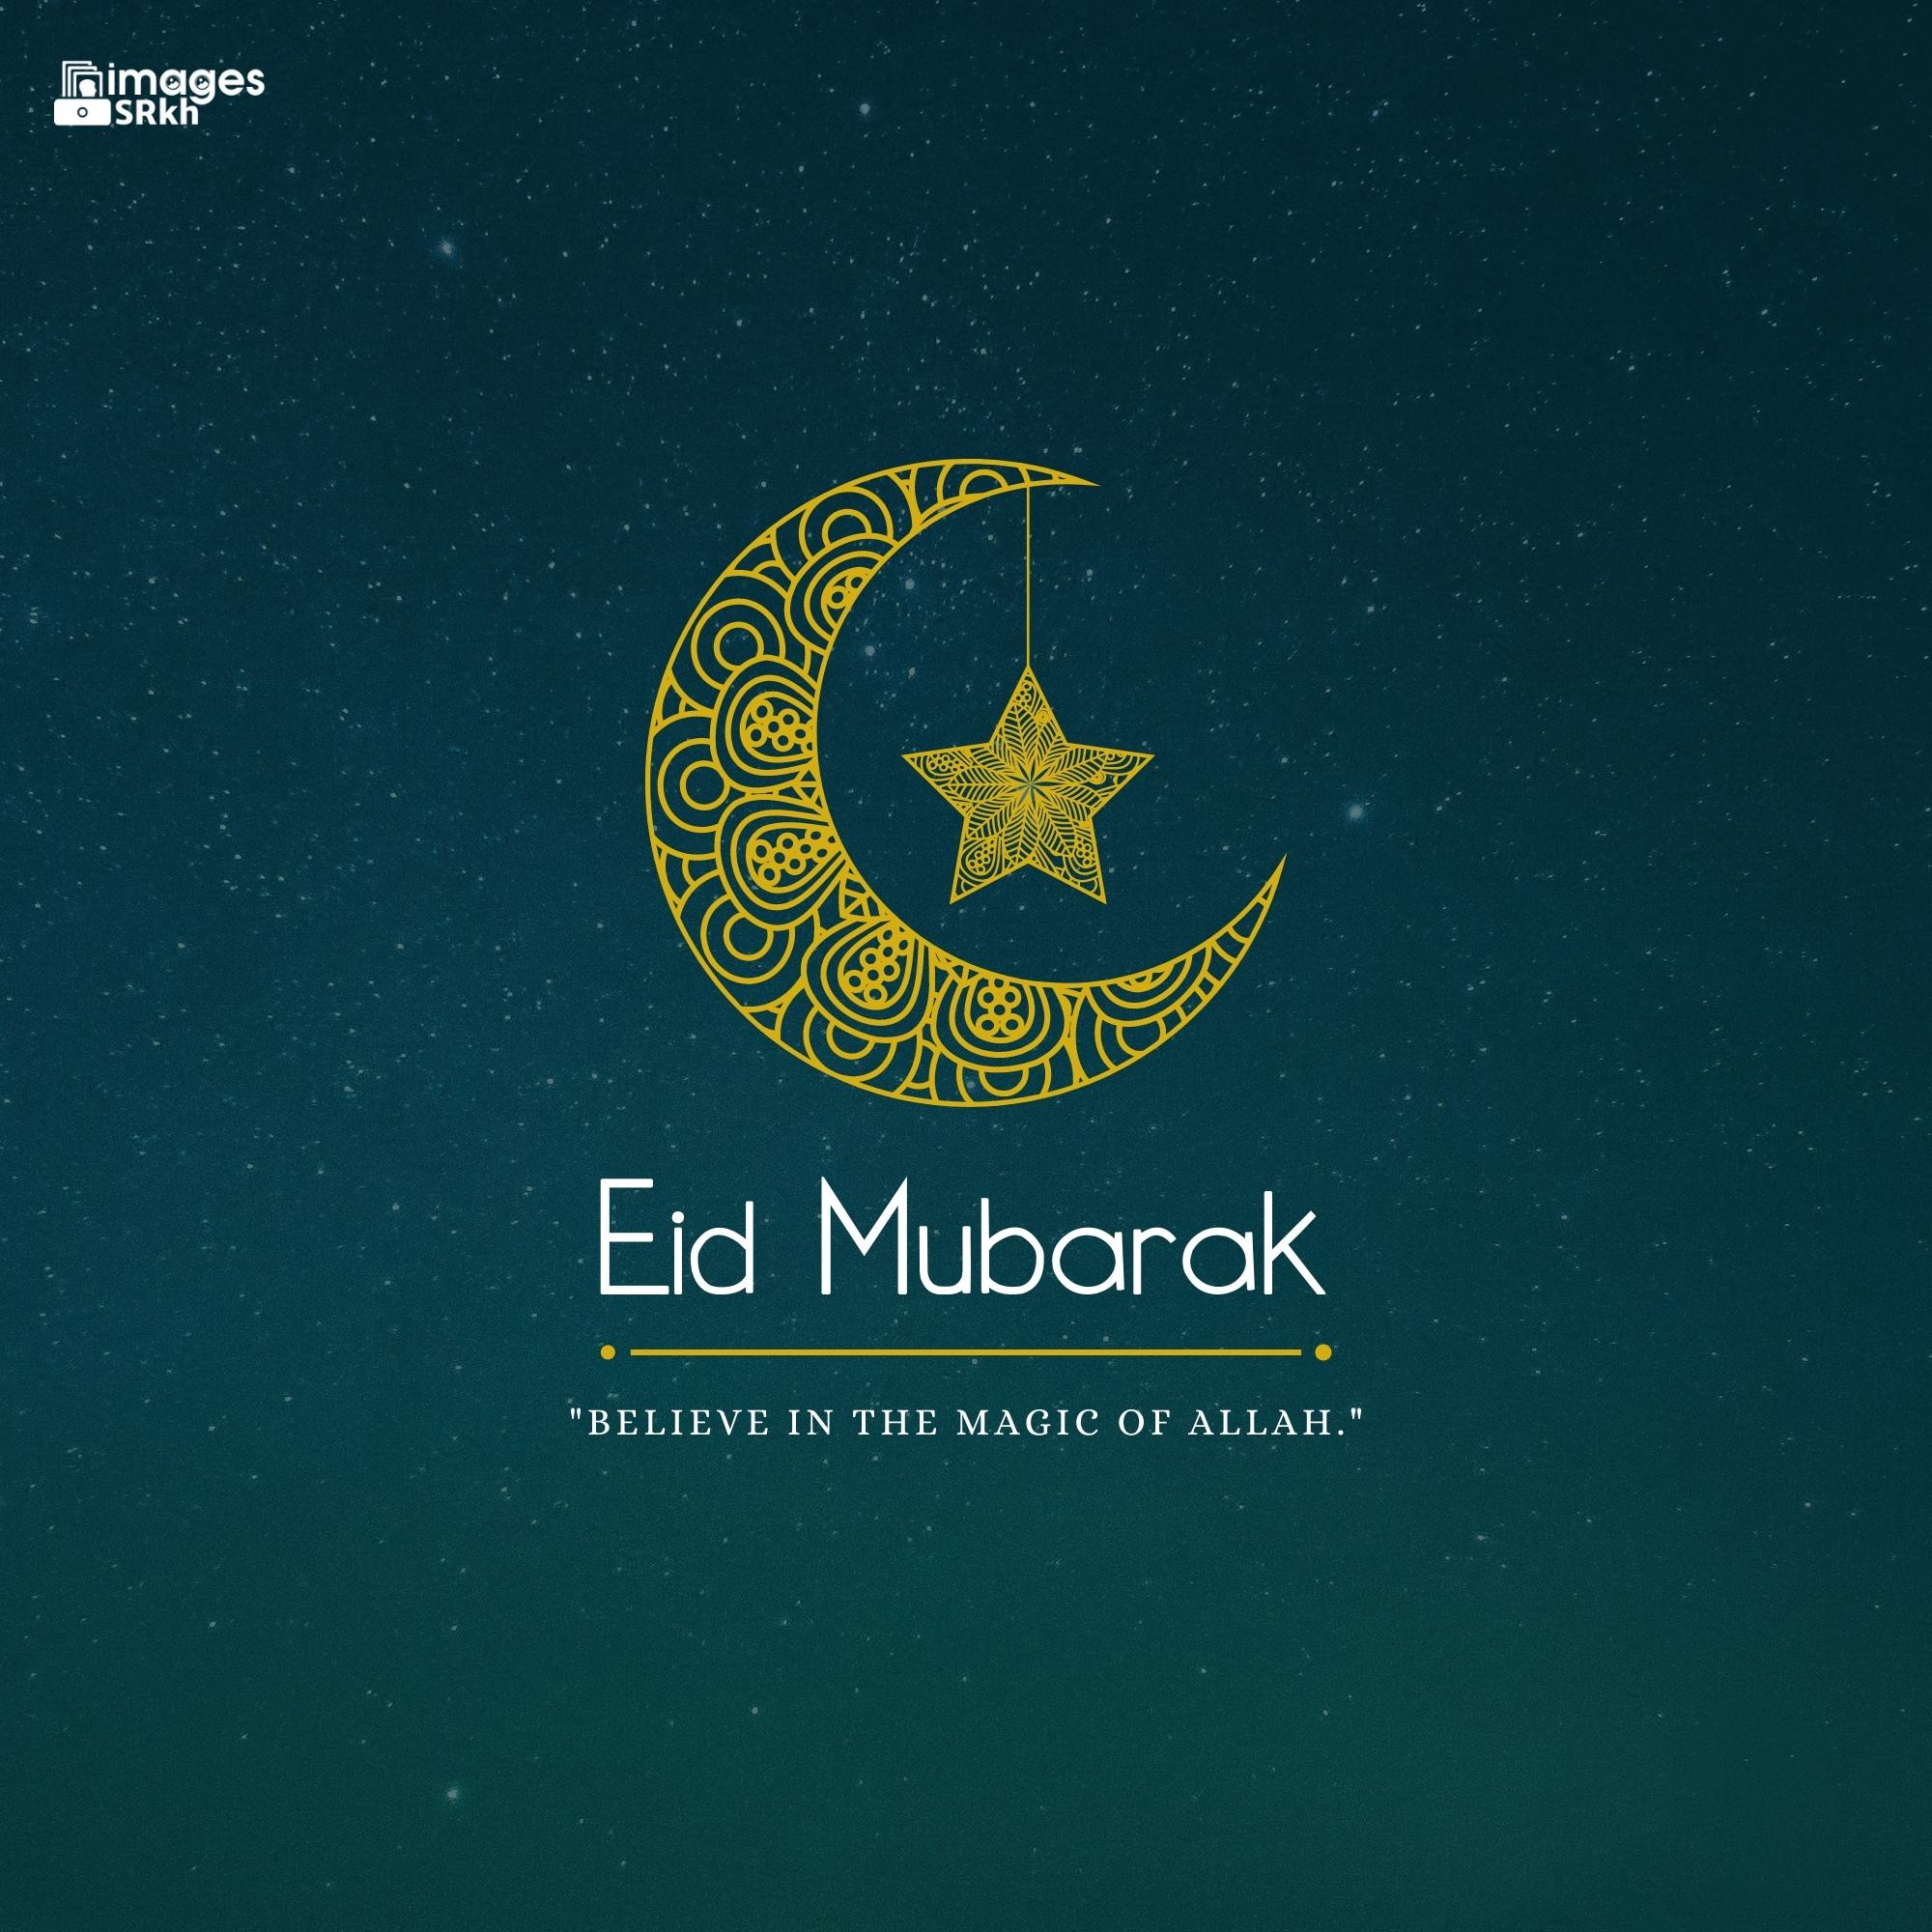 Photo Eid Mubarak (3) | Download free in Hd Quality | imagesSRkh